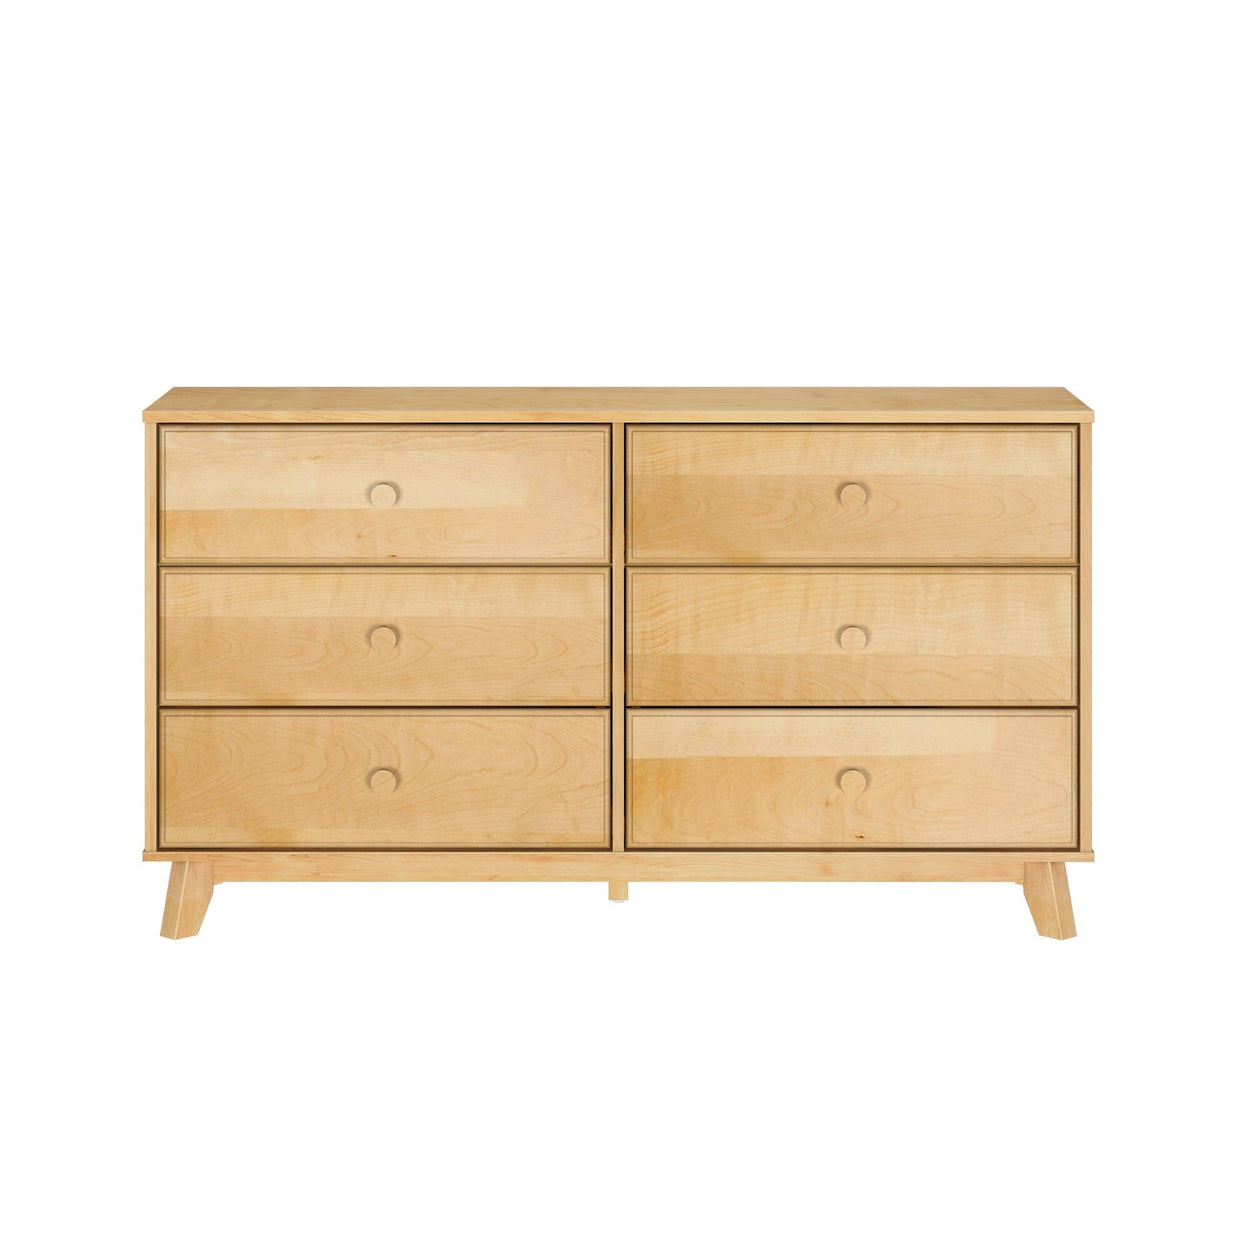 1800216000-001 : Furniture Max & Lily 6 Drawer Dresser, Natural